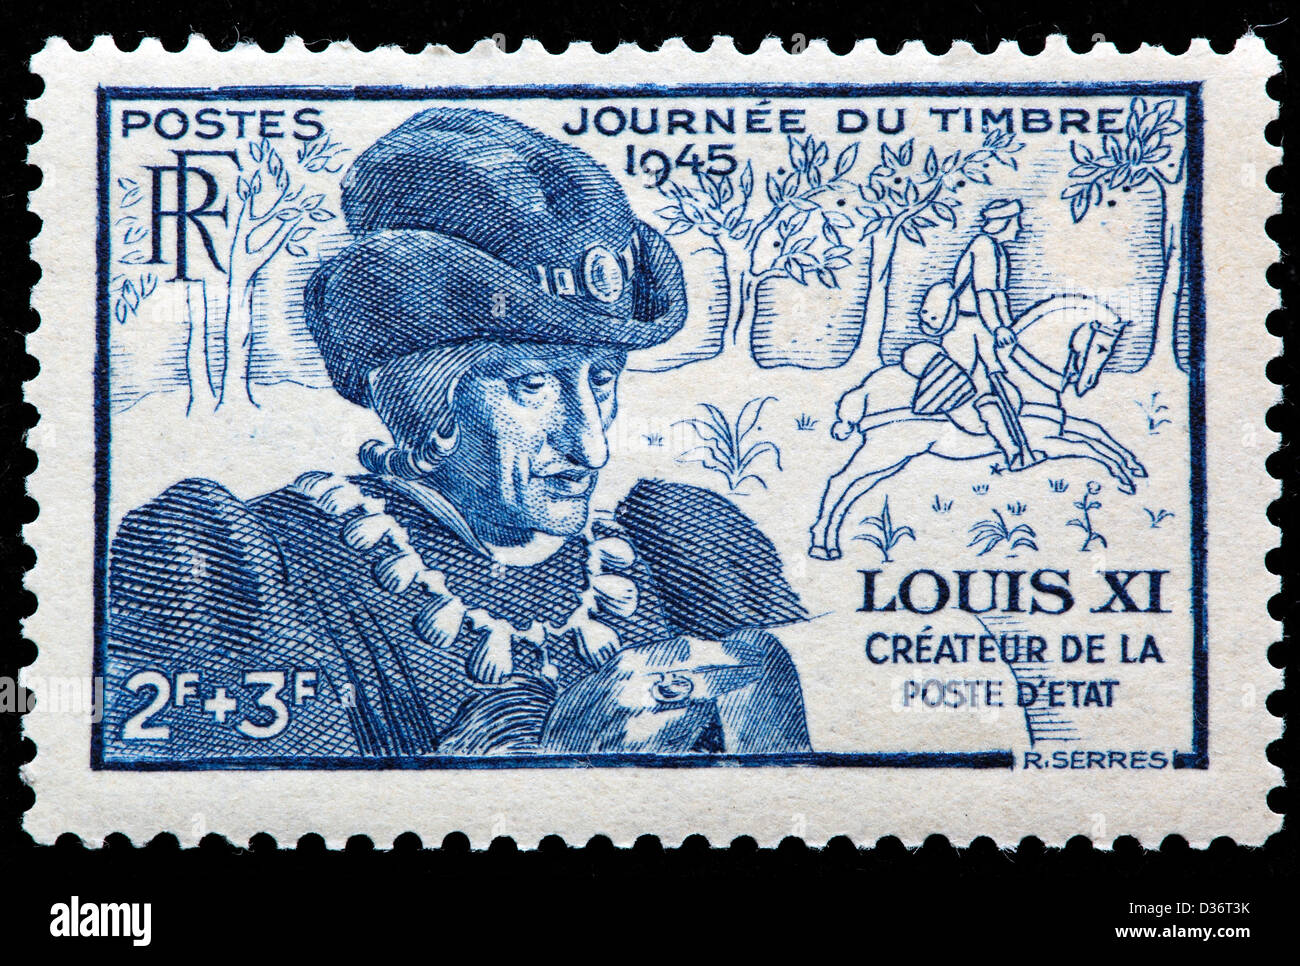 King Louis XI, postage stamp, France, 1945 Stock Photo